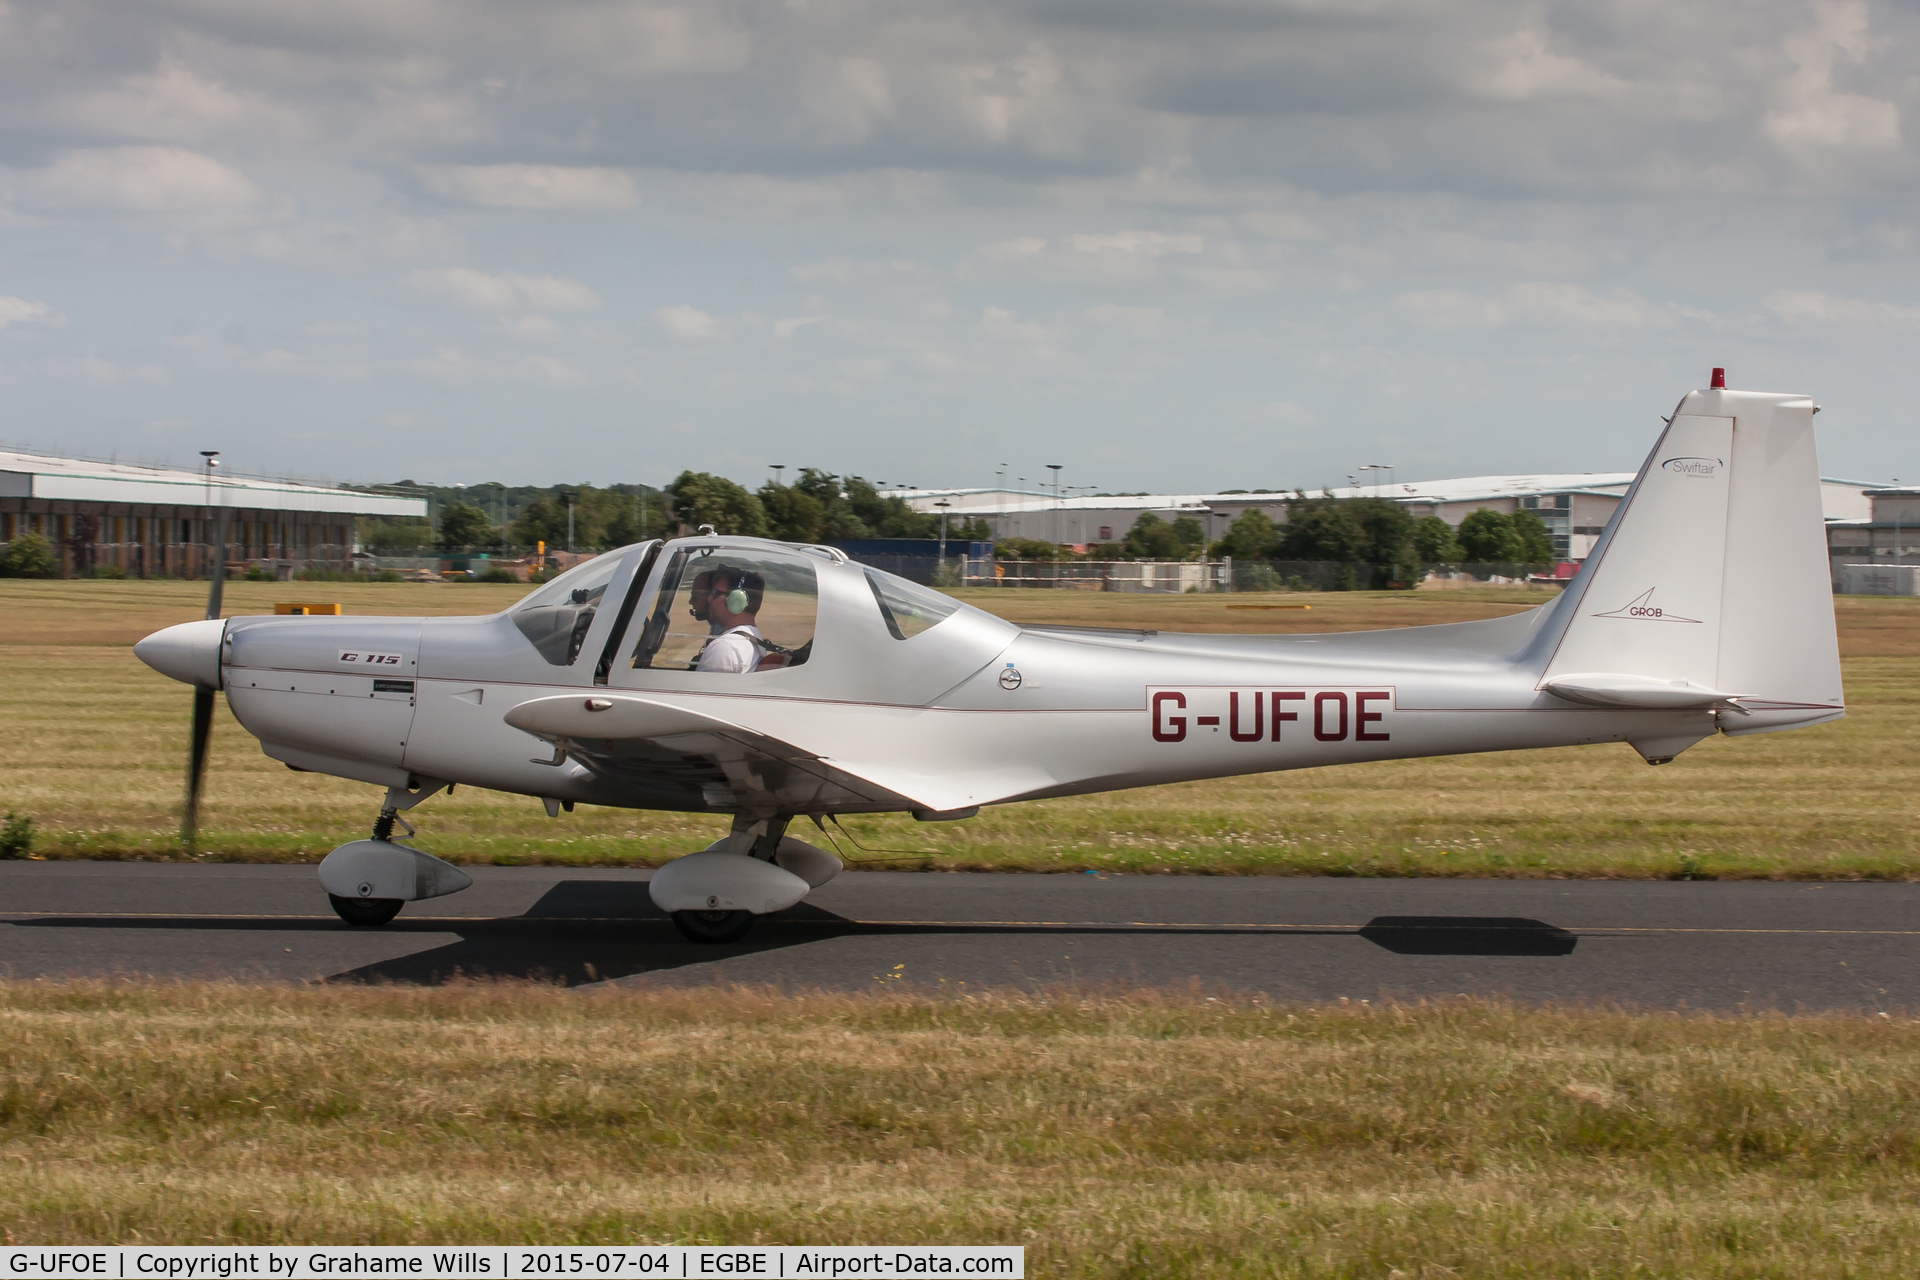 G-UFOE, 1988 Grob G-115 C/N 8033, Grob G115 G-UFOE Swiftair Maintenance, Coventry 4/7/15